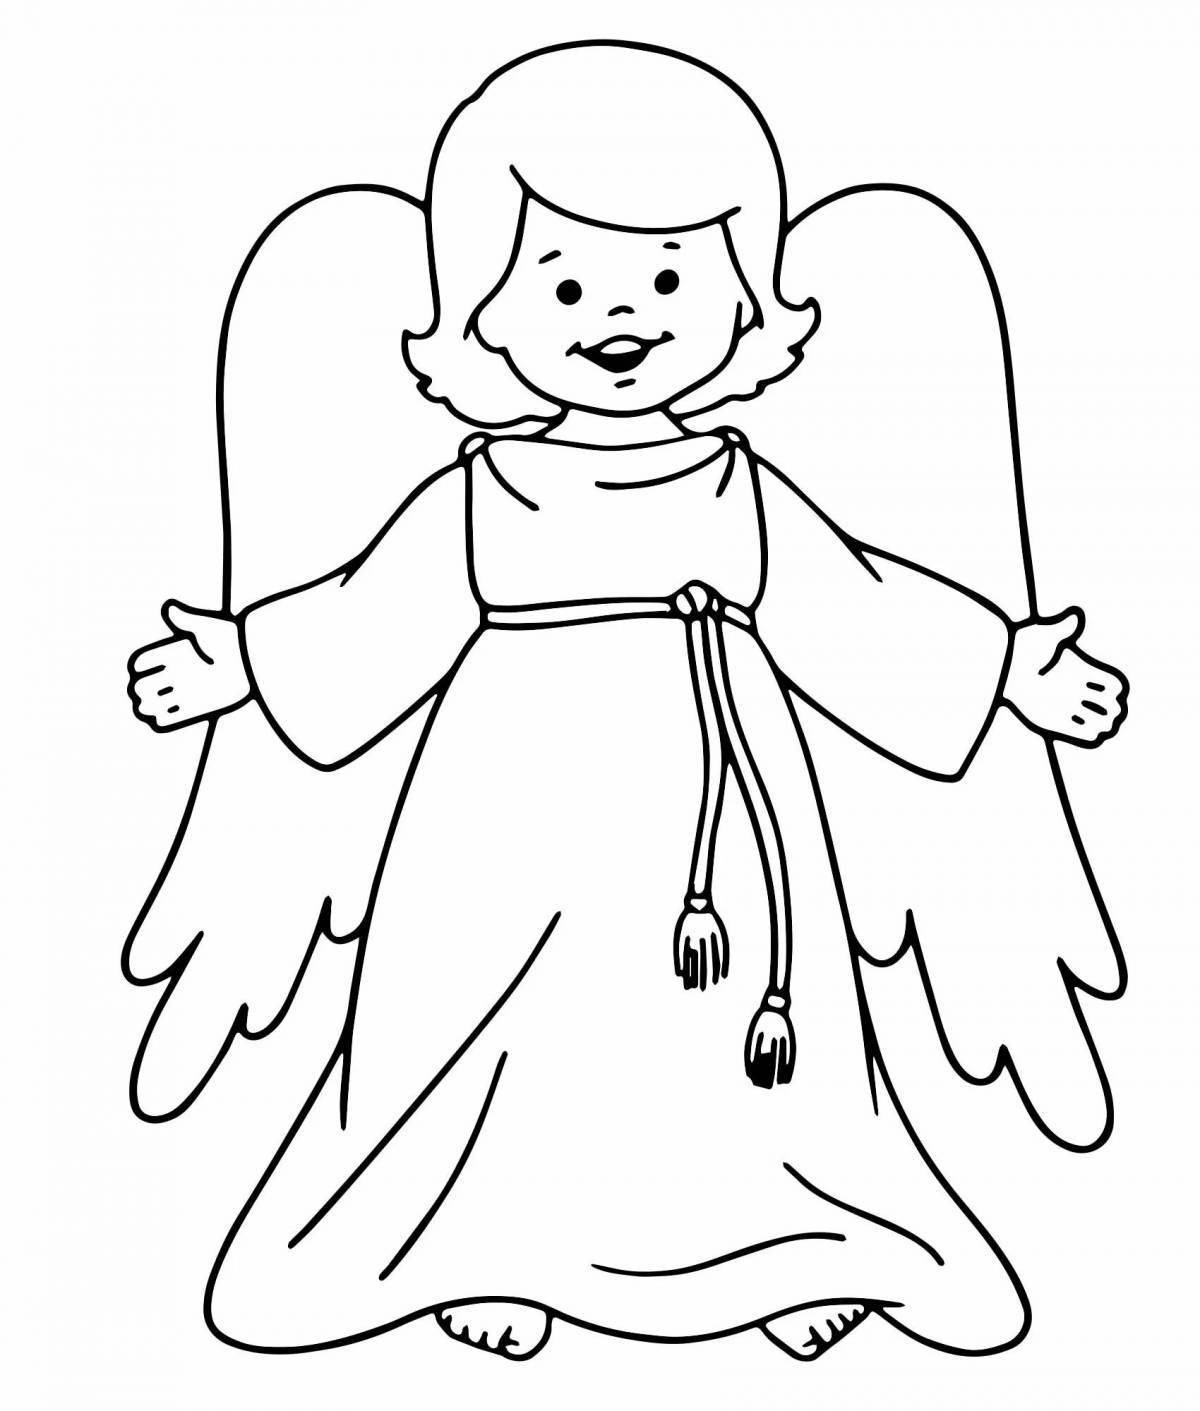 Baby angel #2